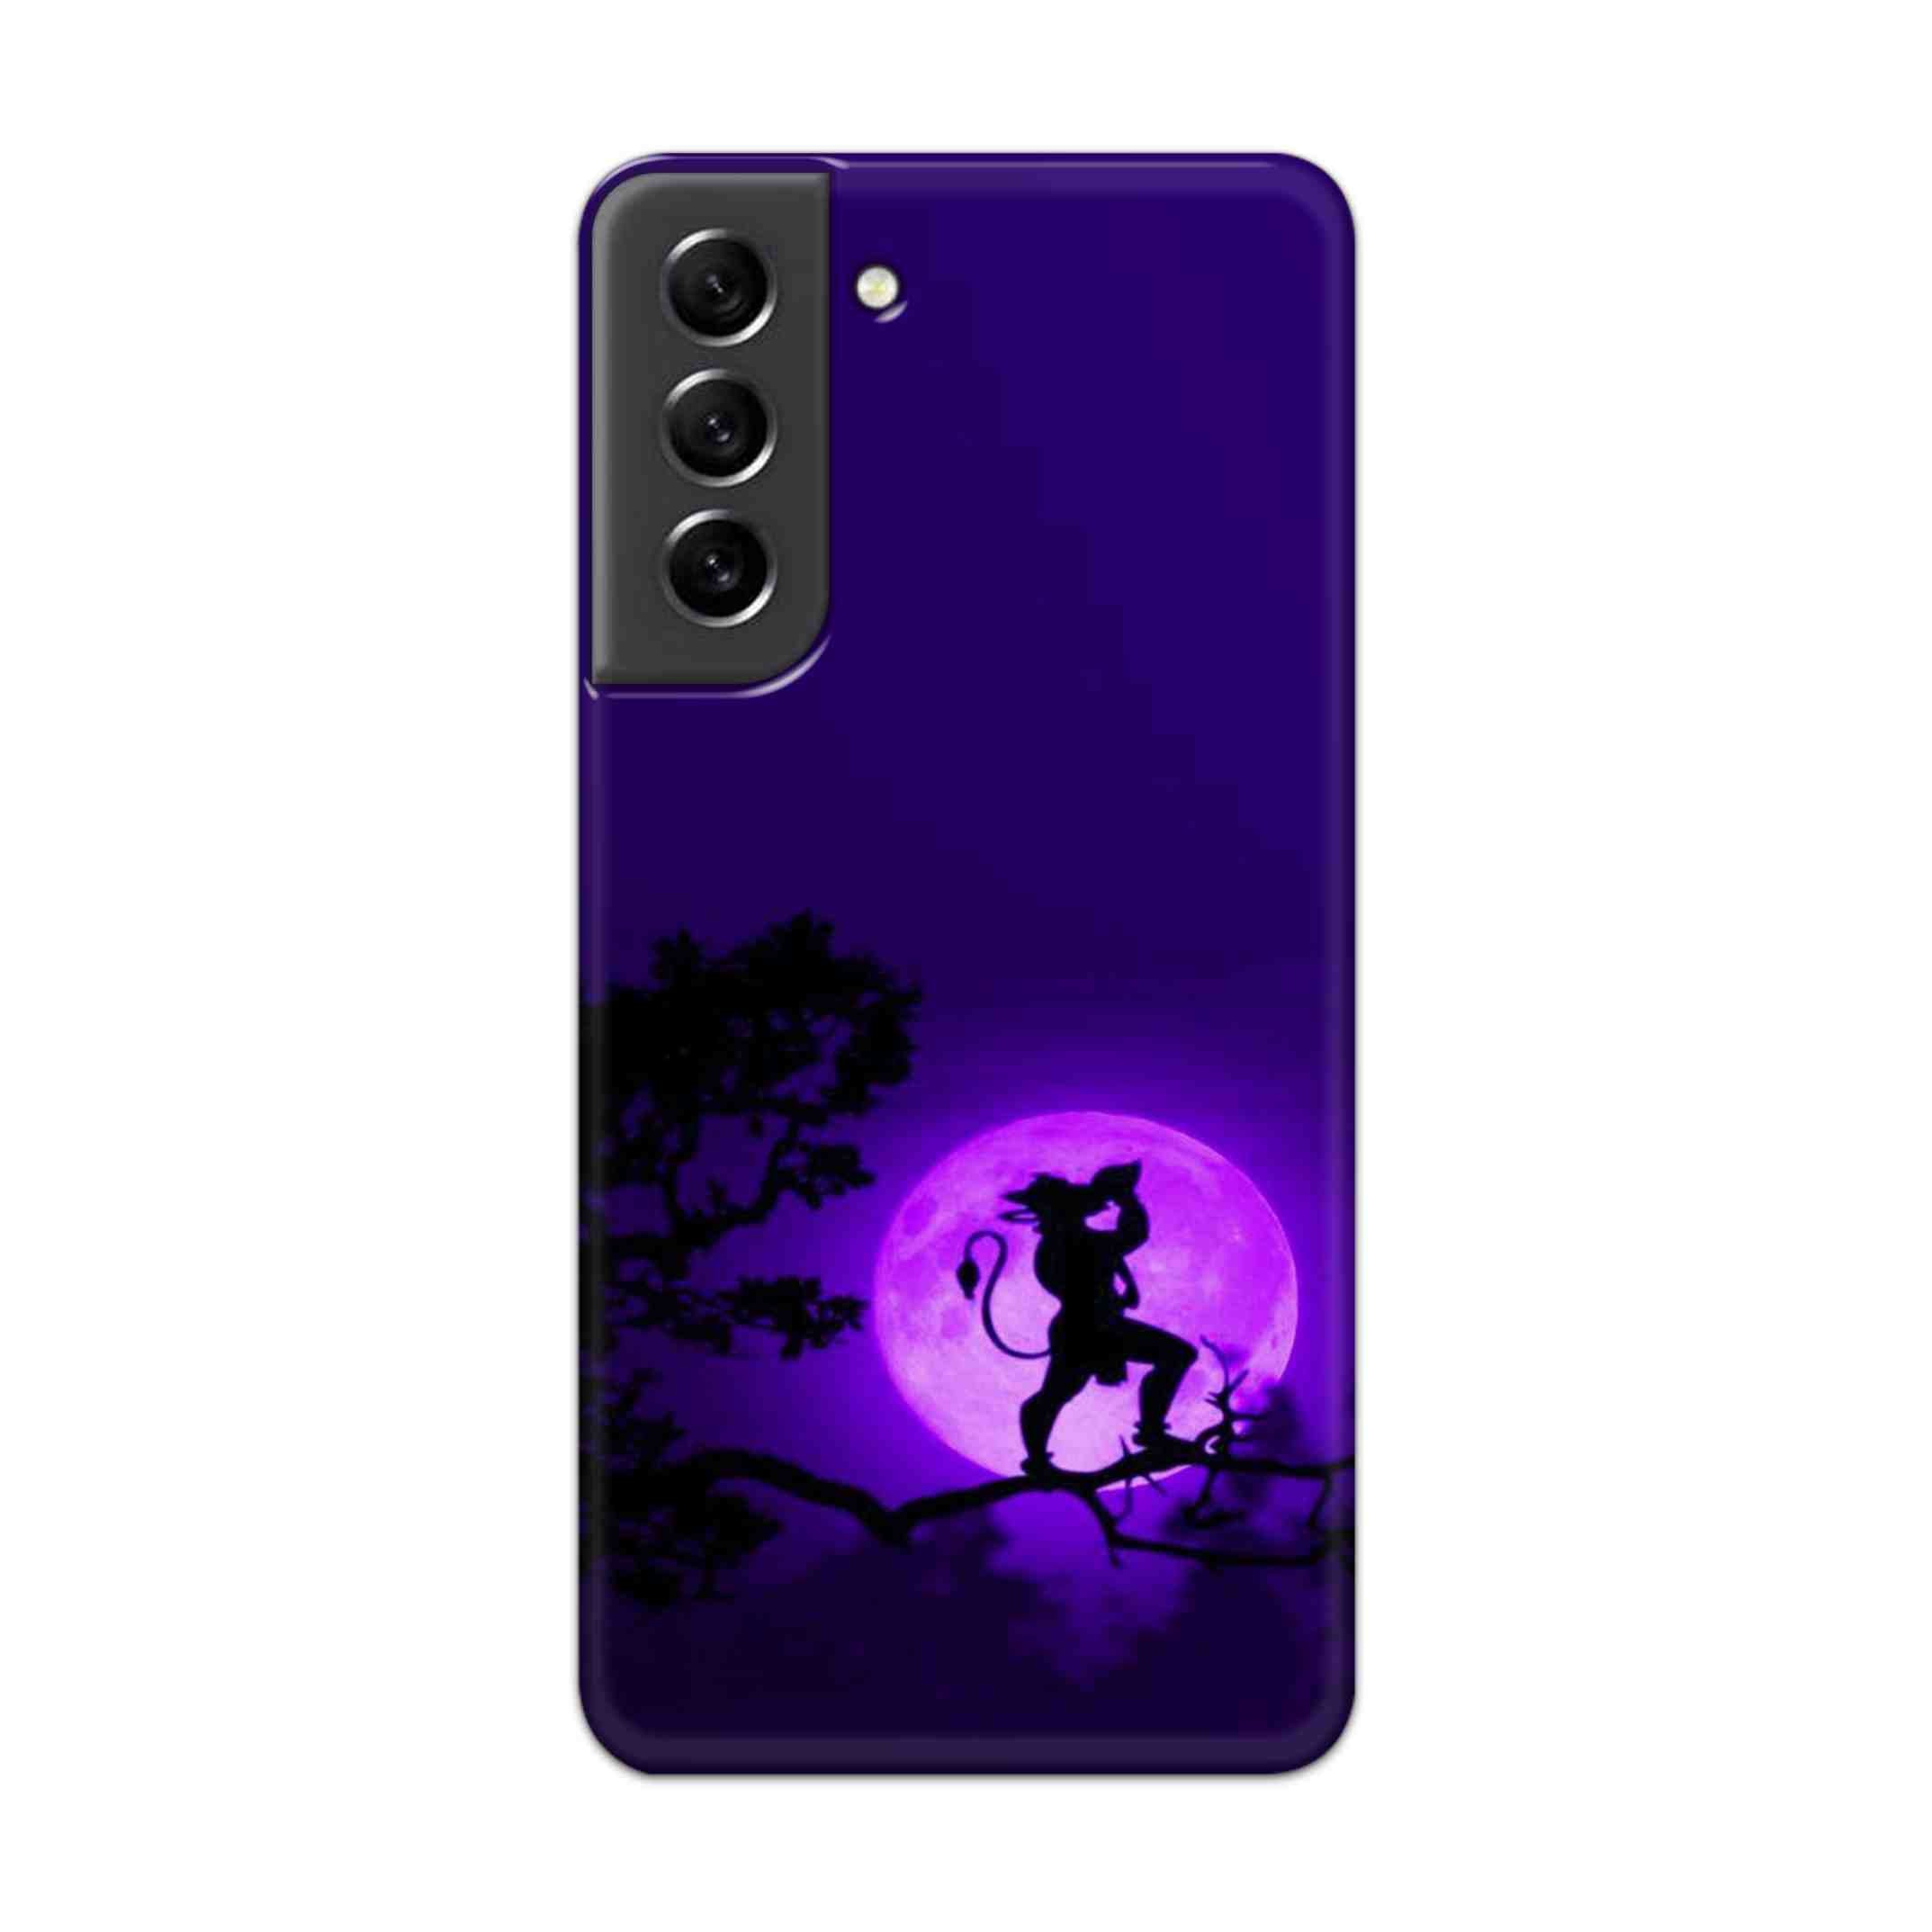 Buy Hanuman Hard Back Mobile Phone Case Cover For Samsung S21 FE Online